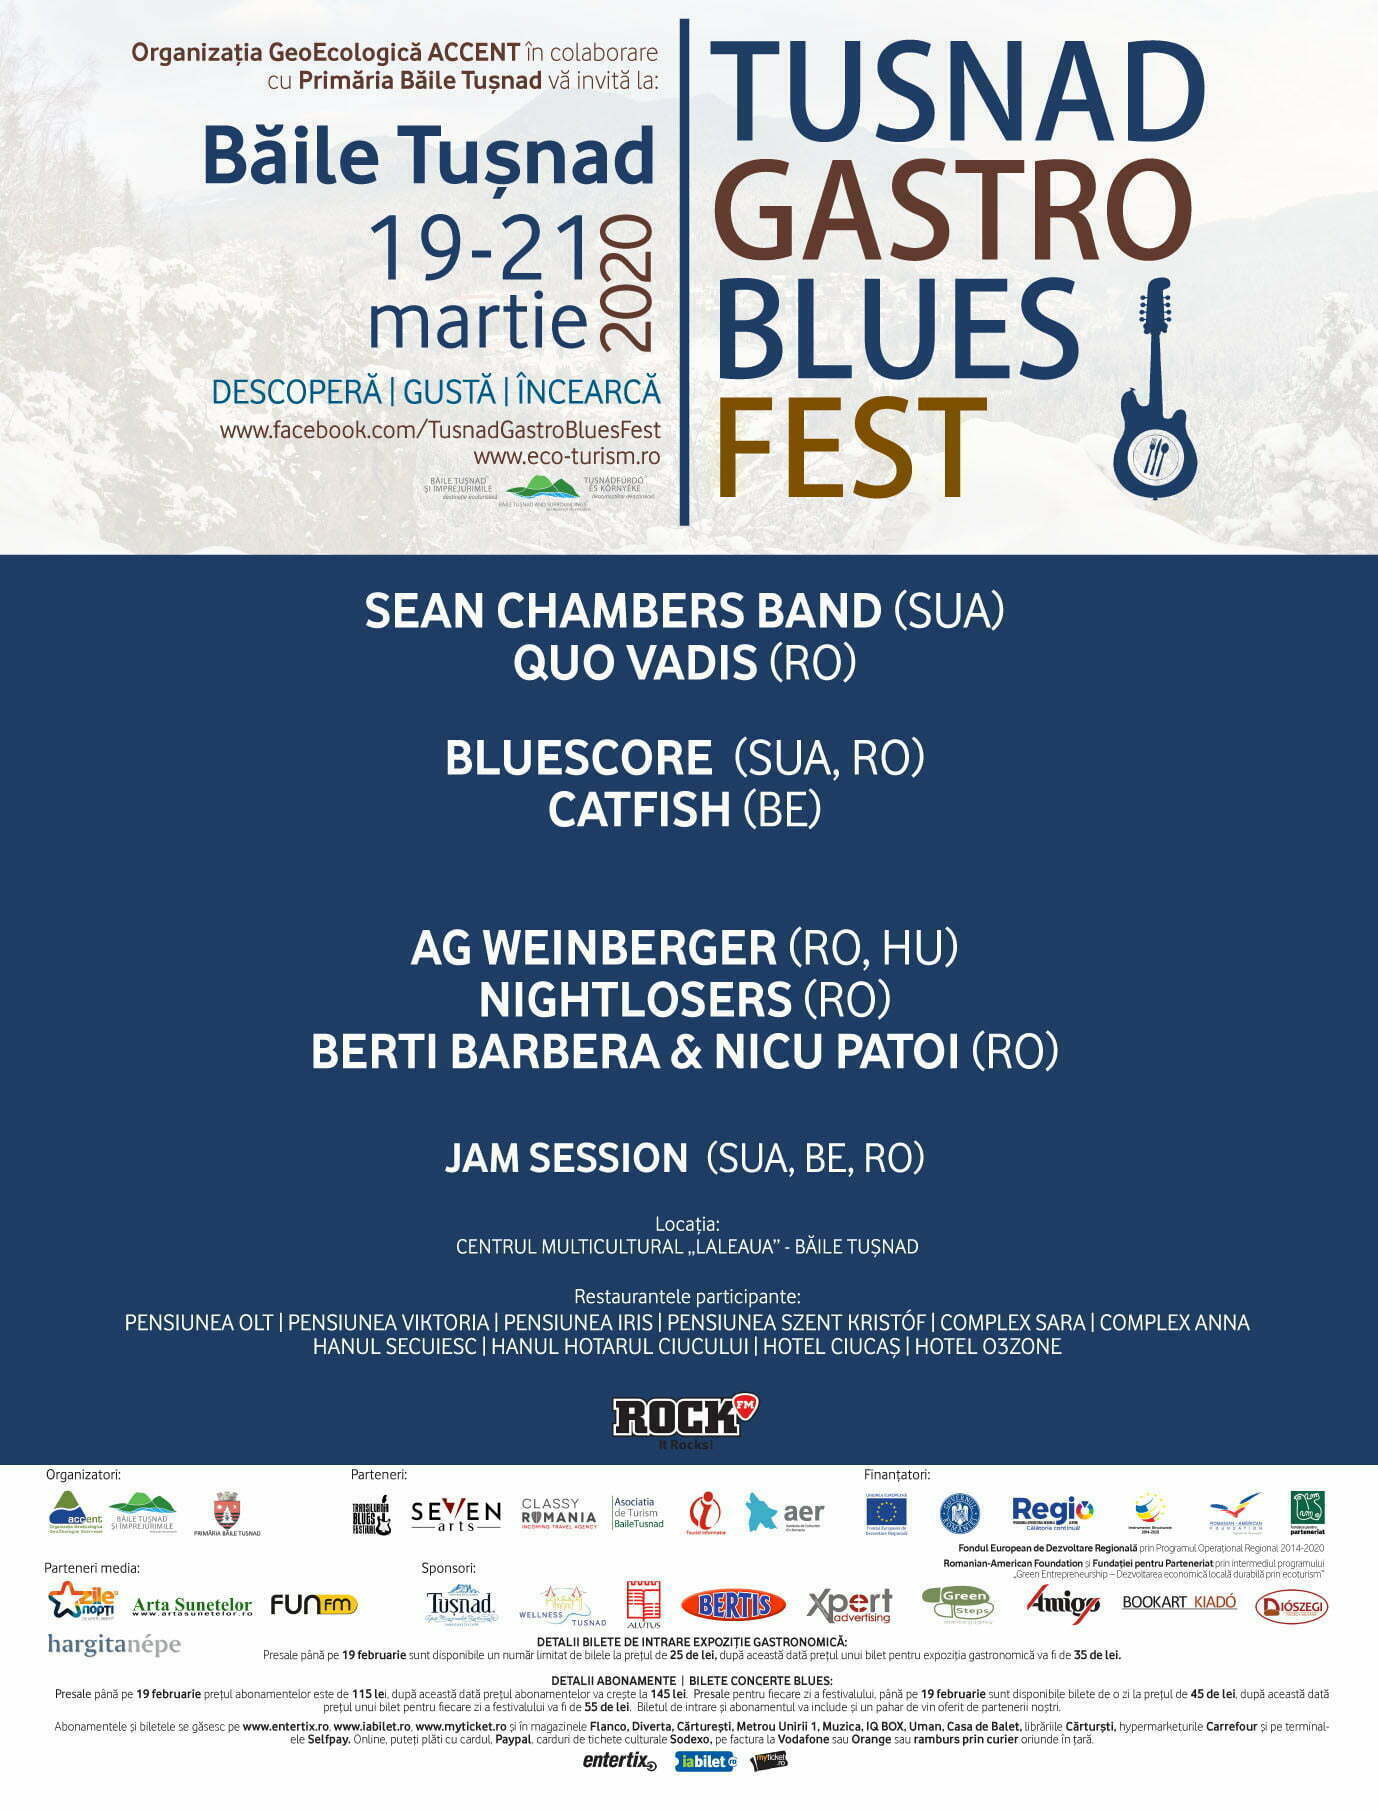 TUSNAD GASTRO BLUES FEST | 19 - 21 martie 2020 @ Băile Tușnad